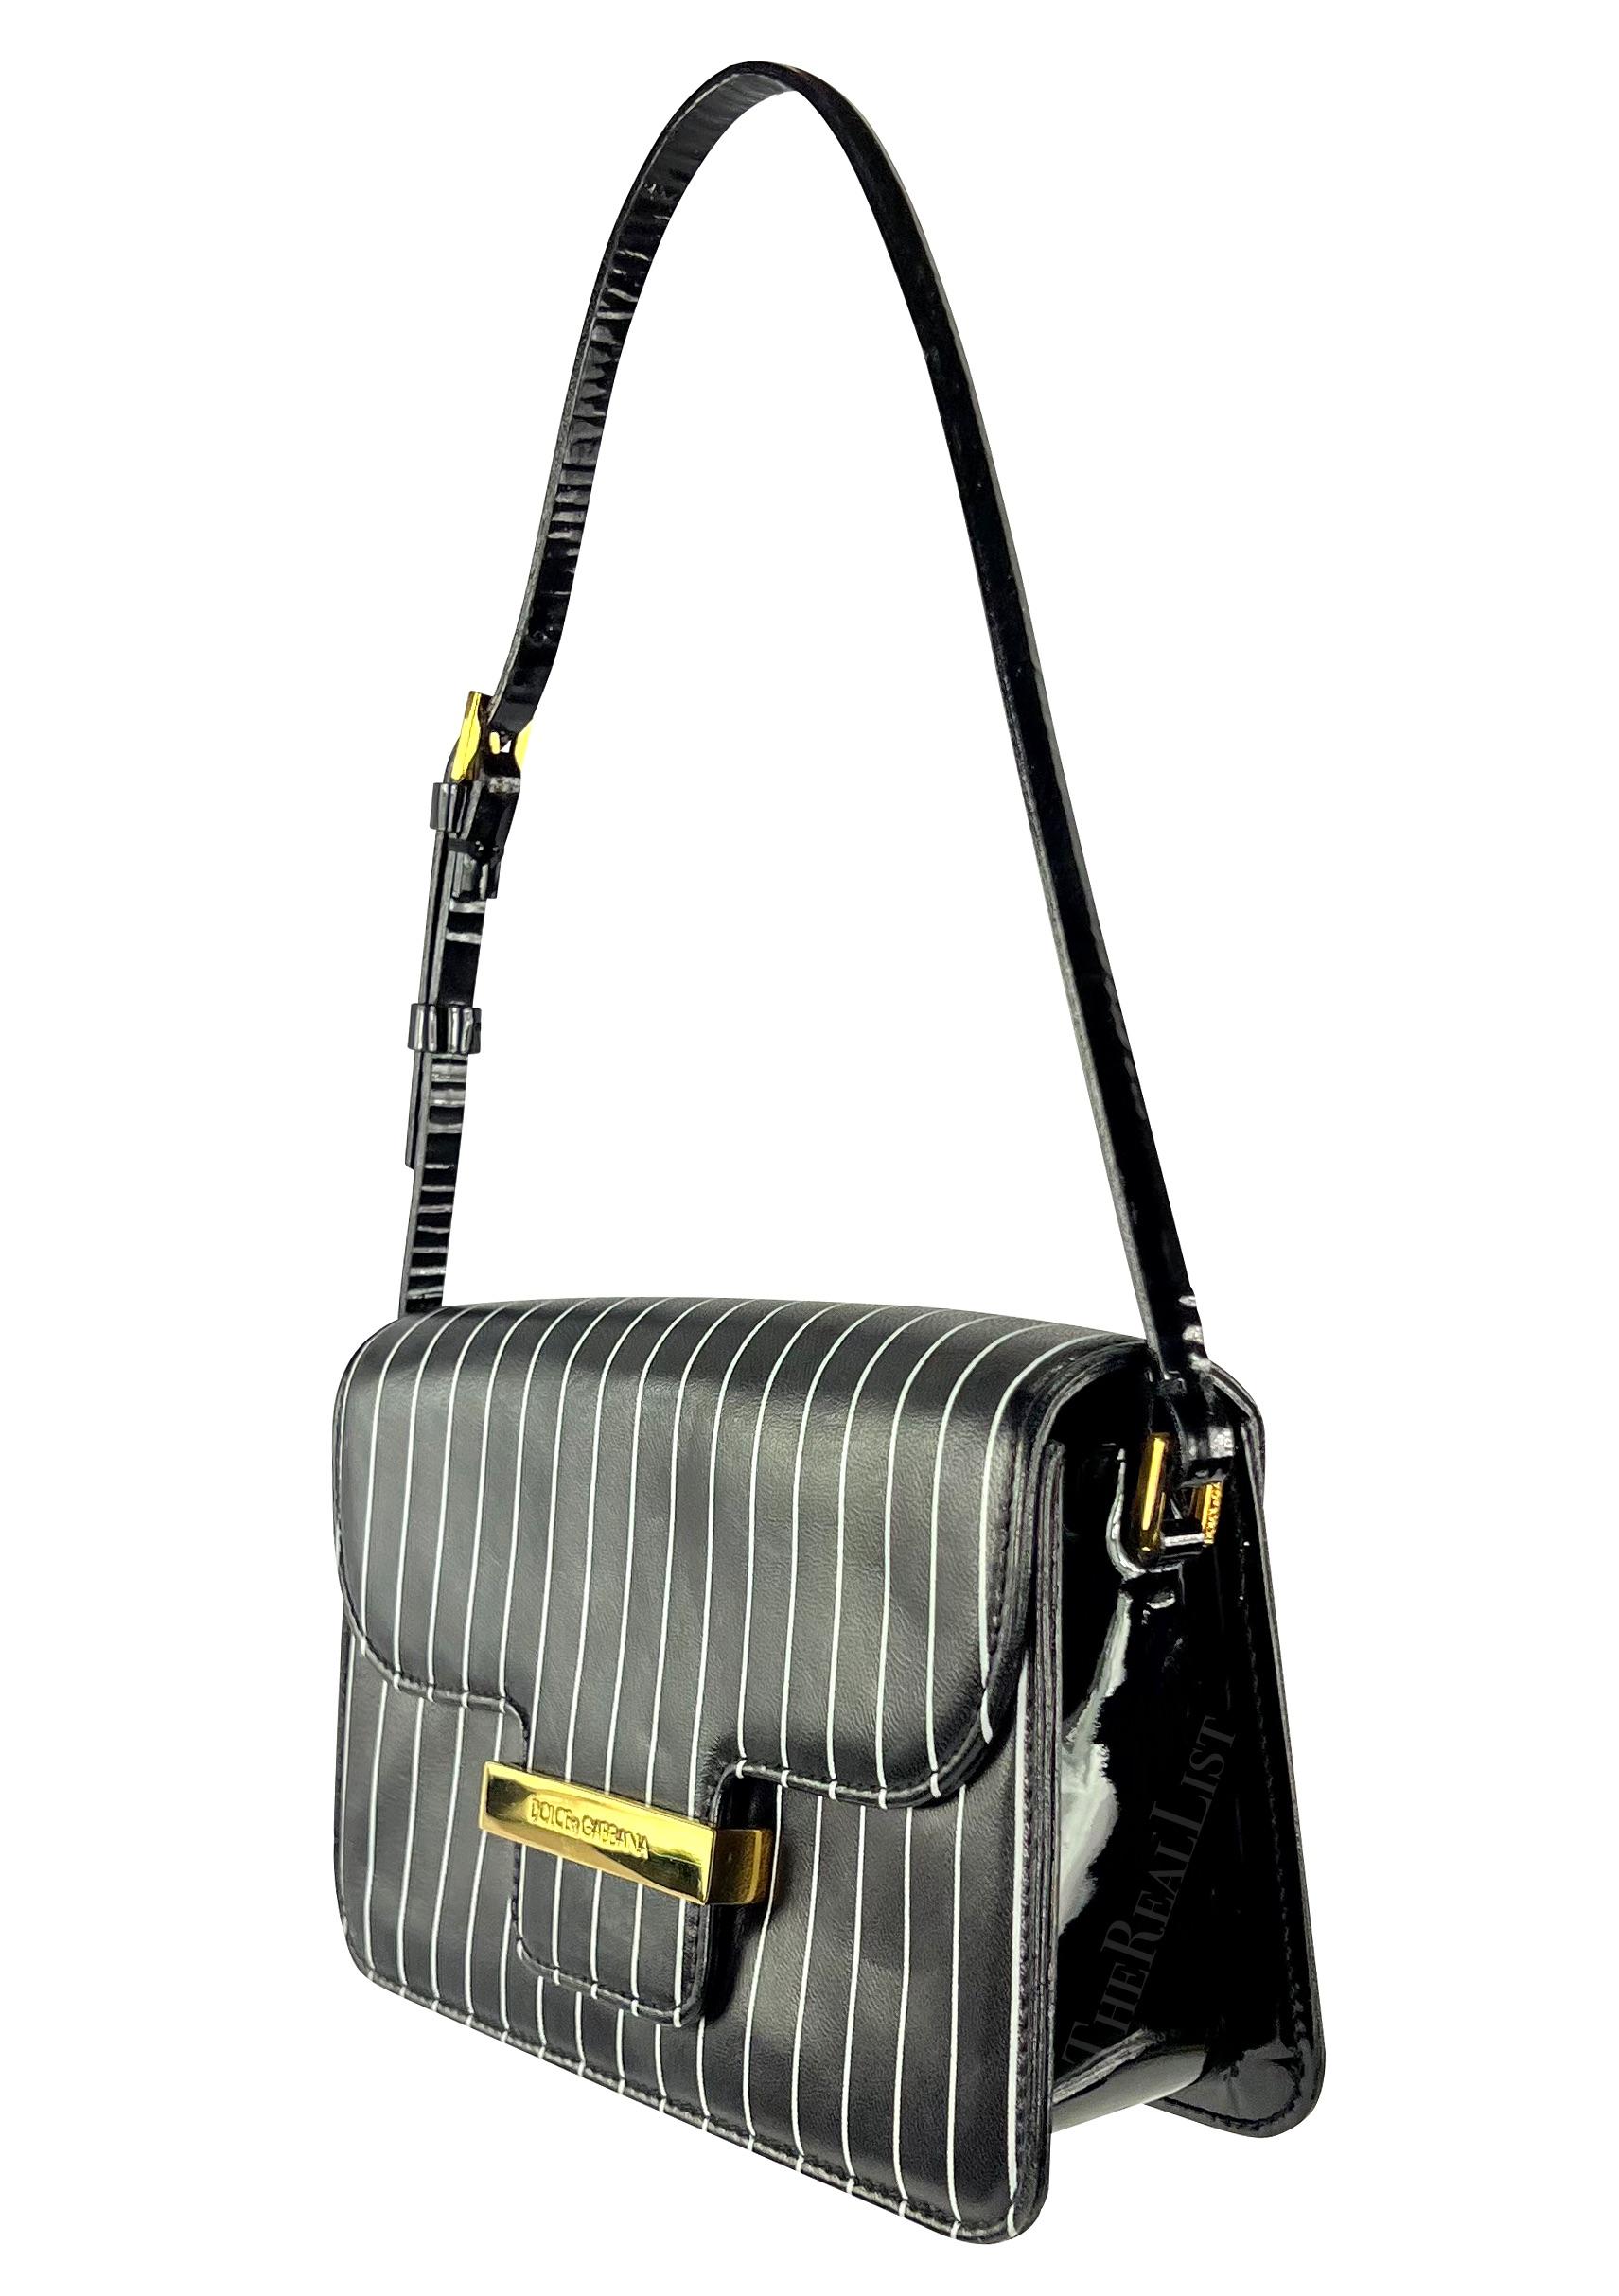 Women's S/S 2001 Dolce & Gabbana Runway Black Pinstripe Leather Patent Mini Shoulder Bag For Sale